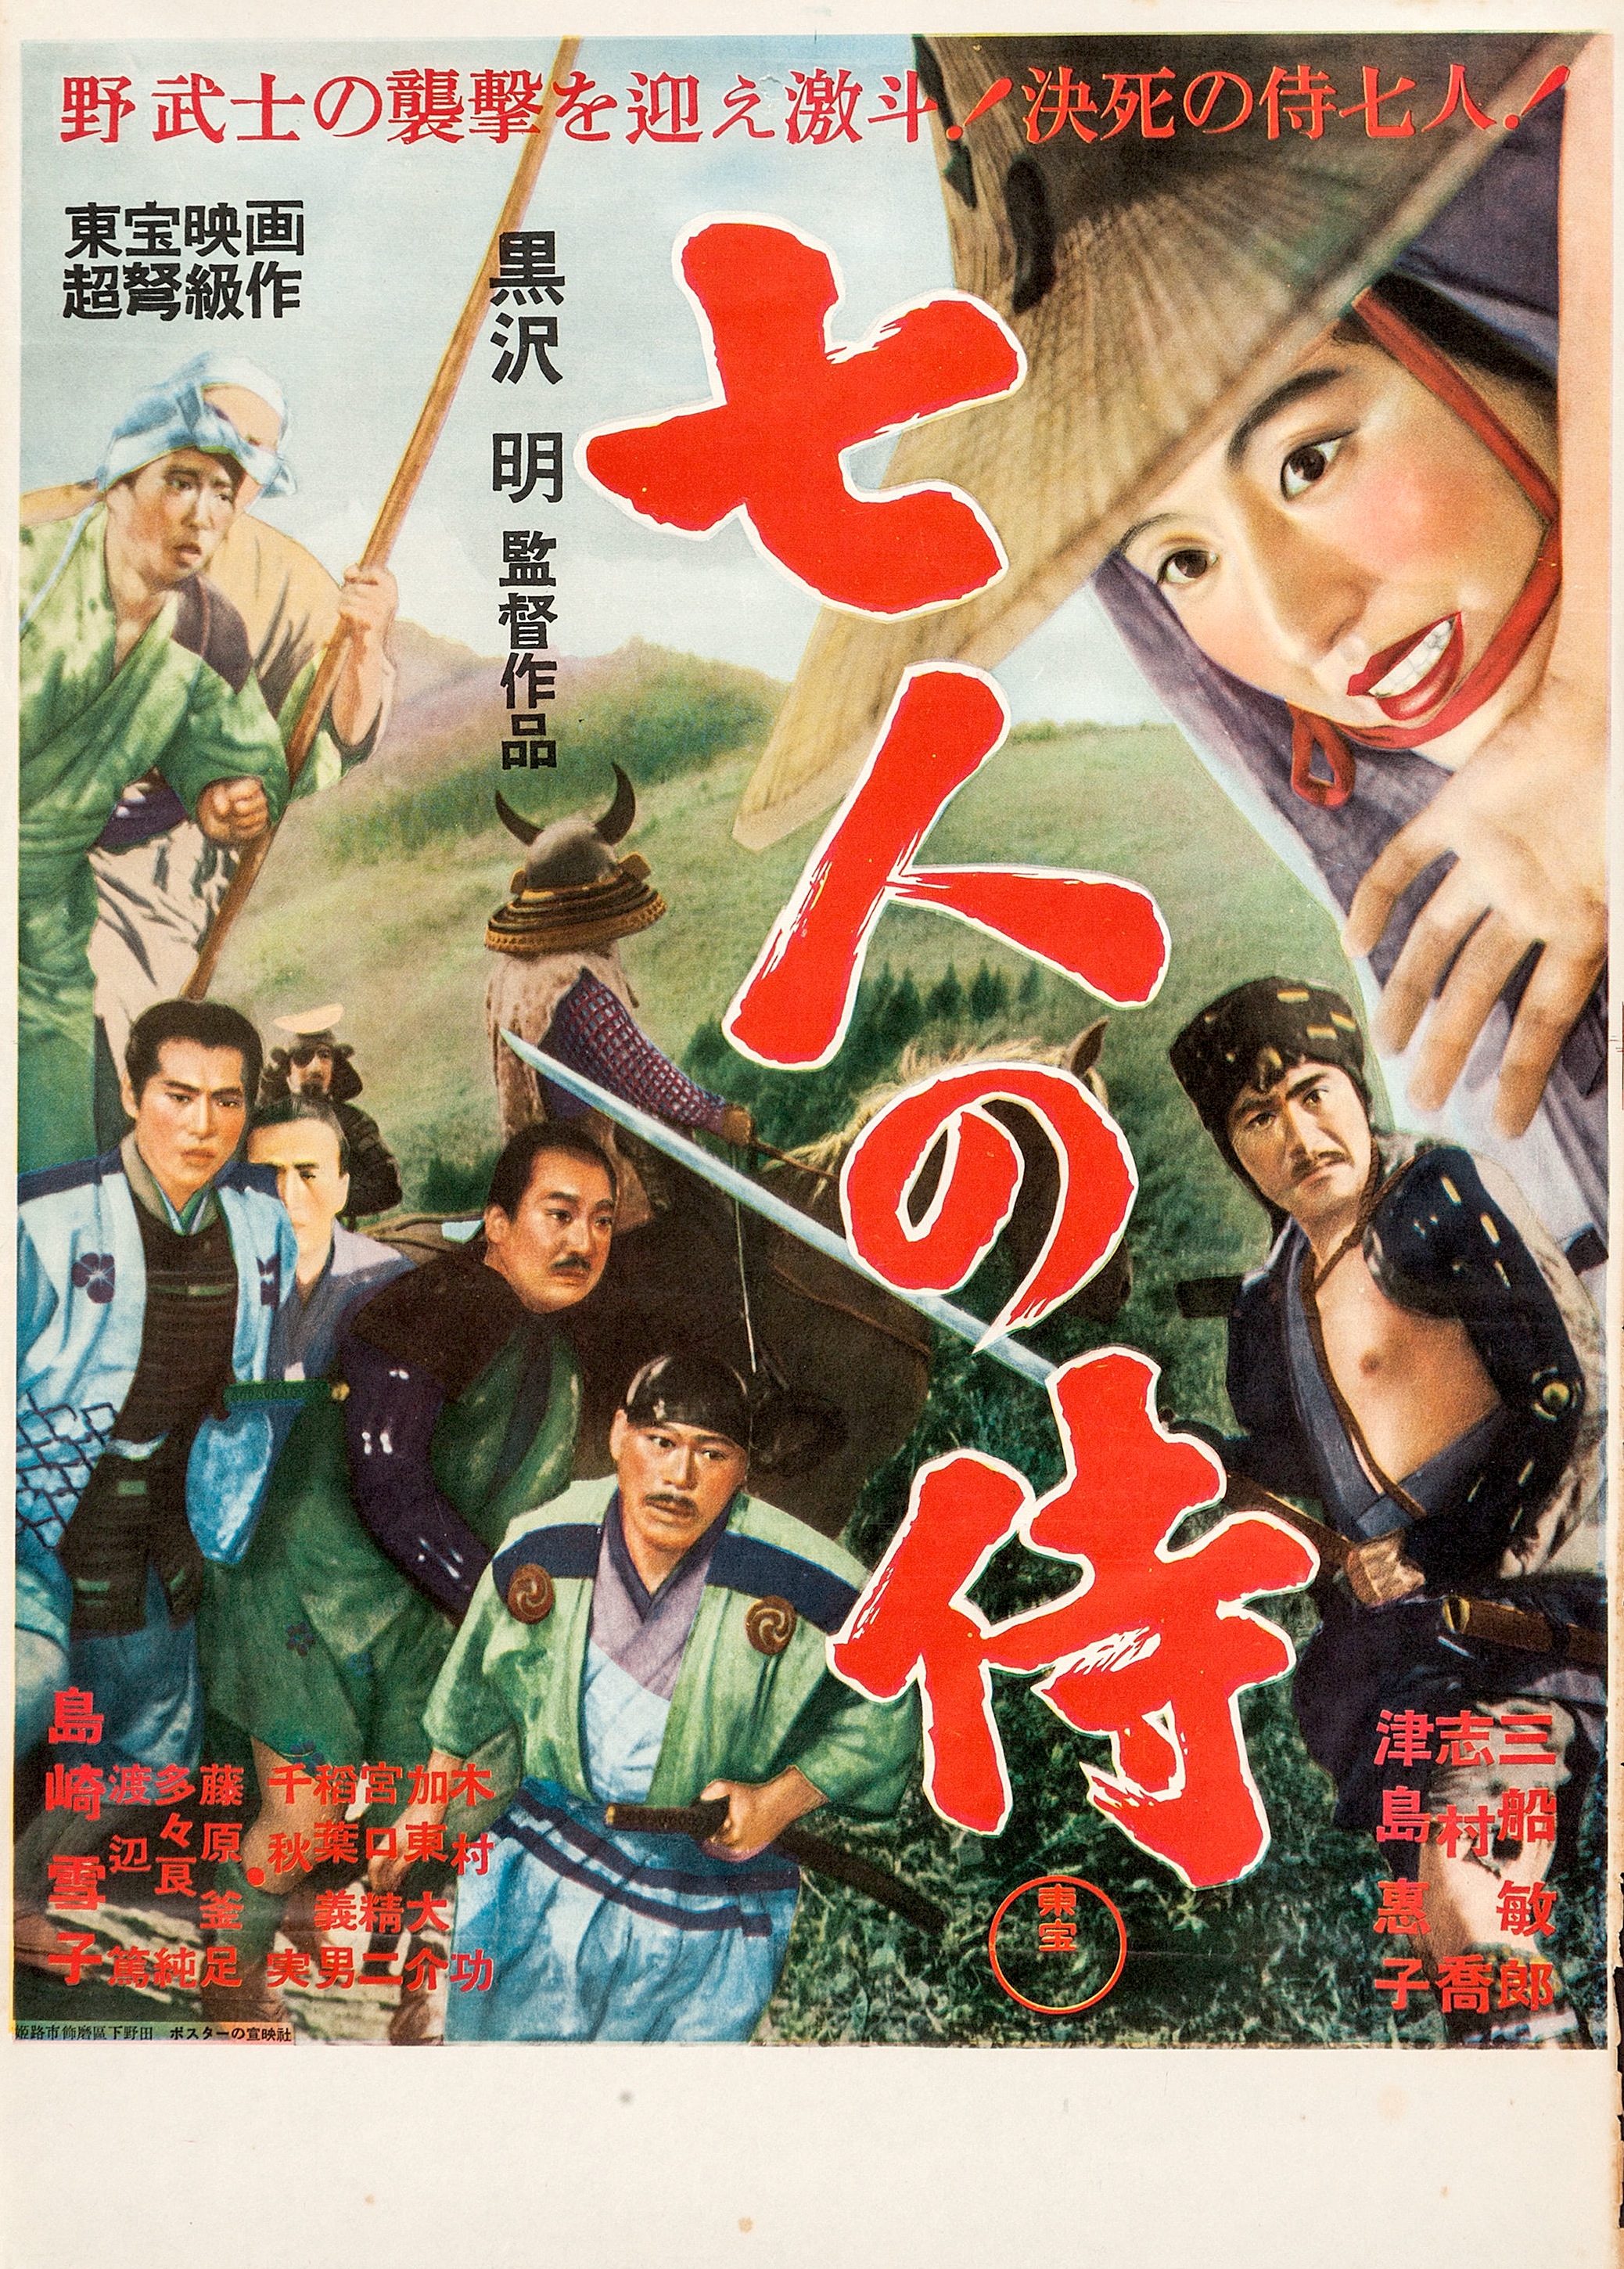 Sevensamurai-movieposter1954.jpg